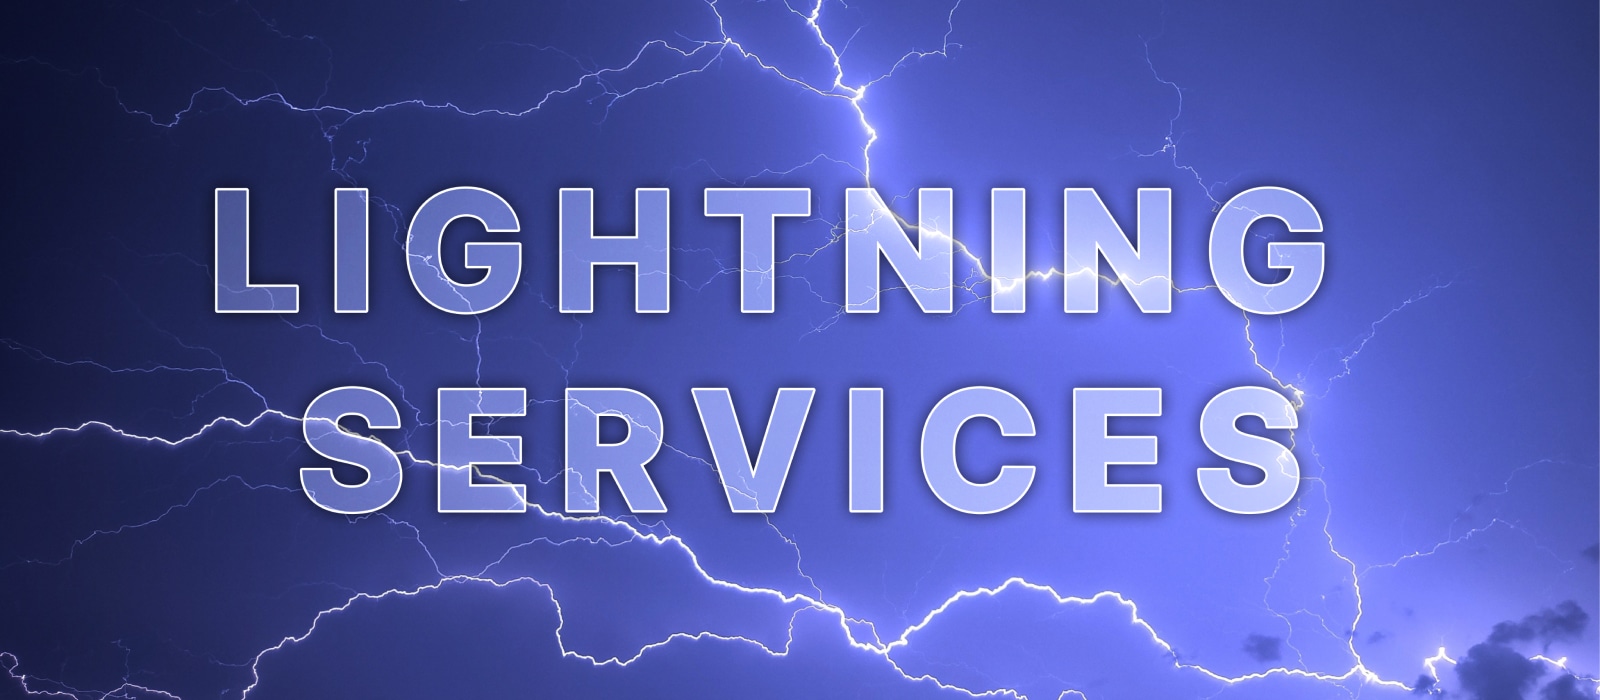 Lightning service providers header image.